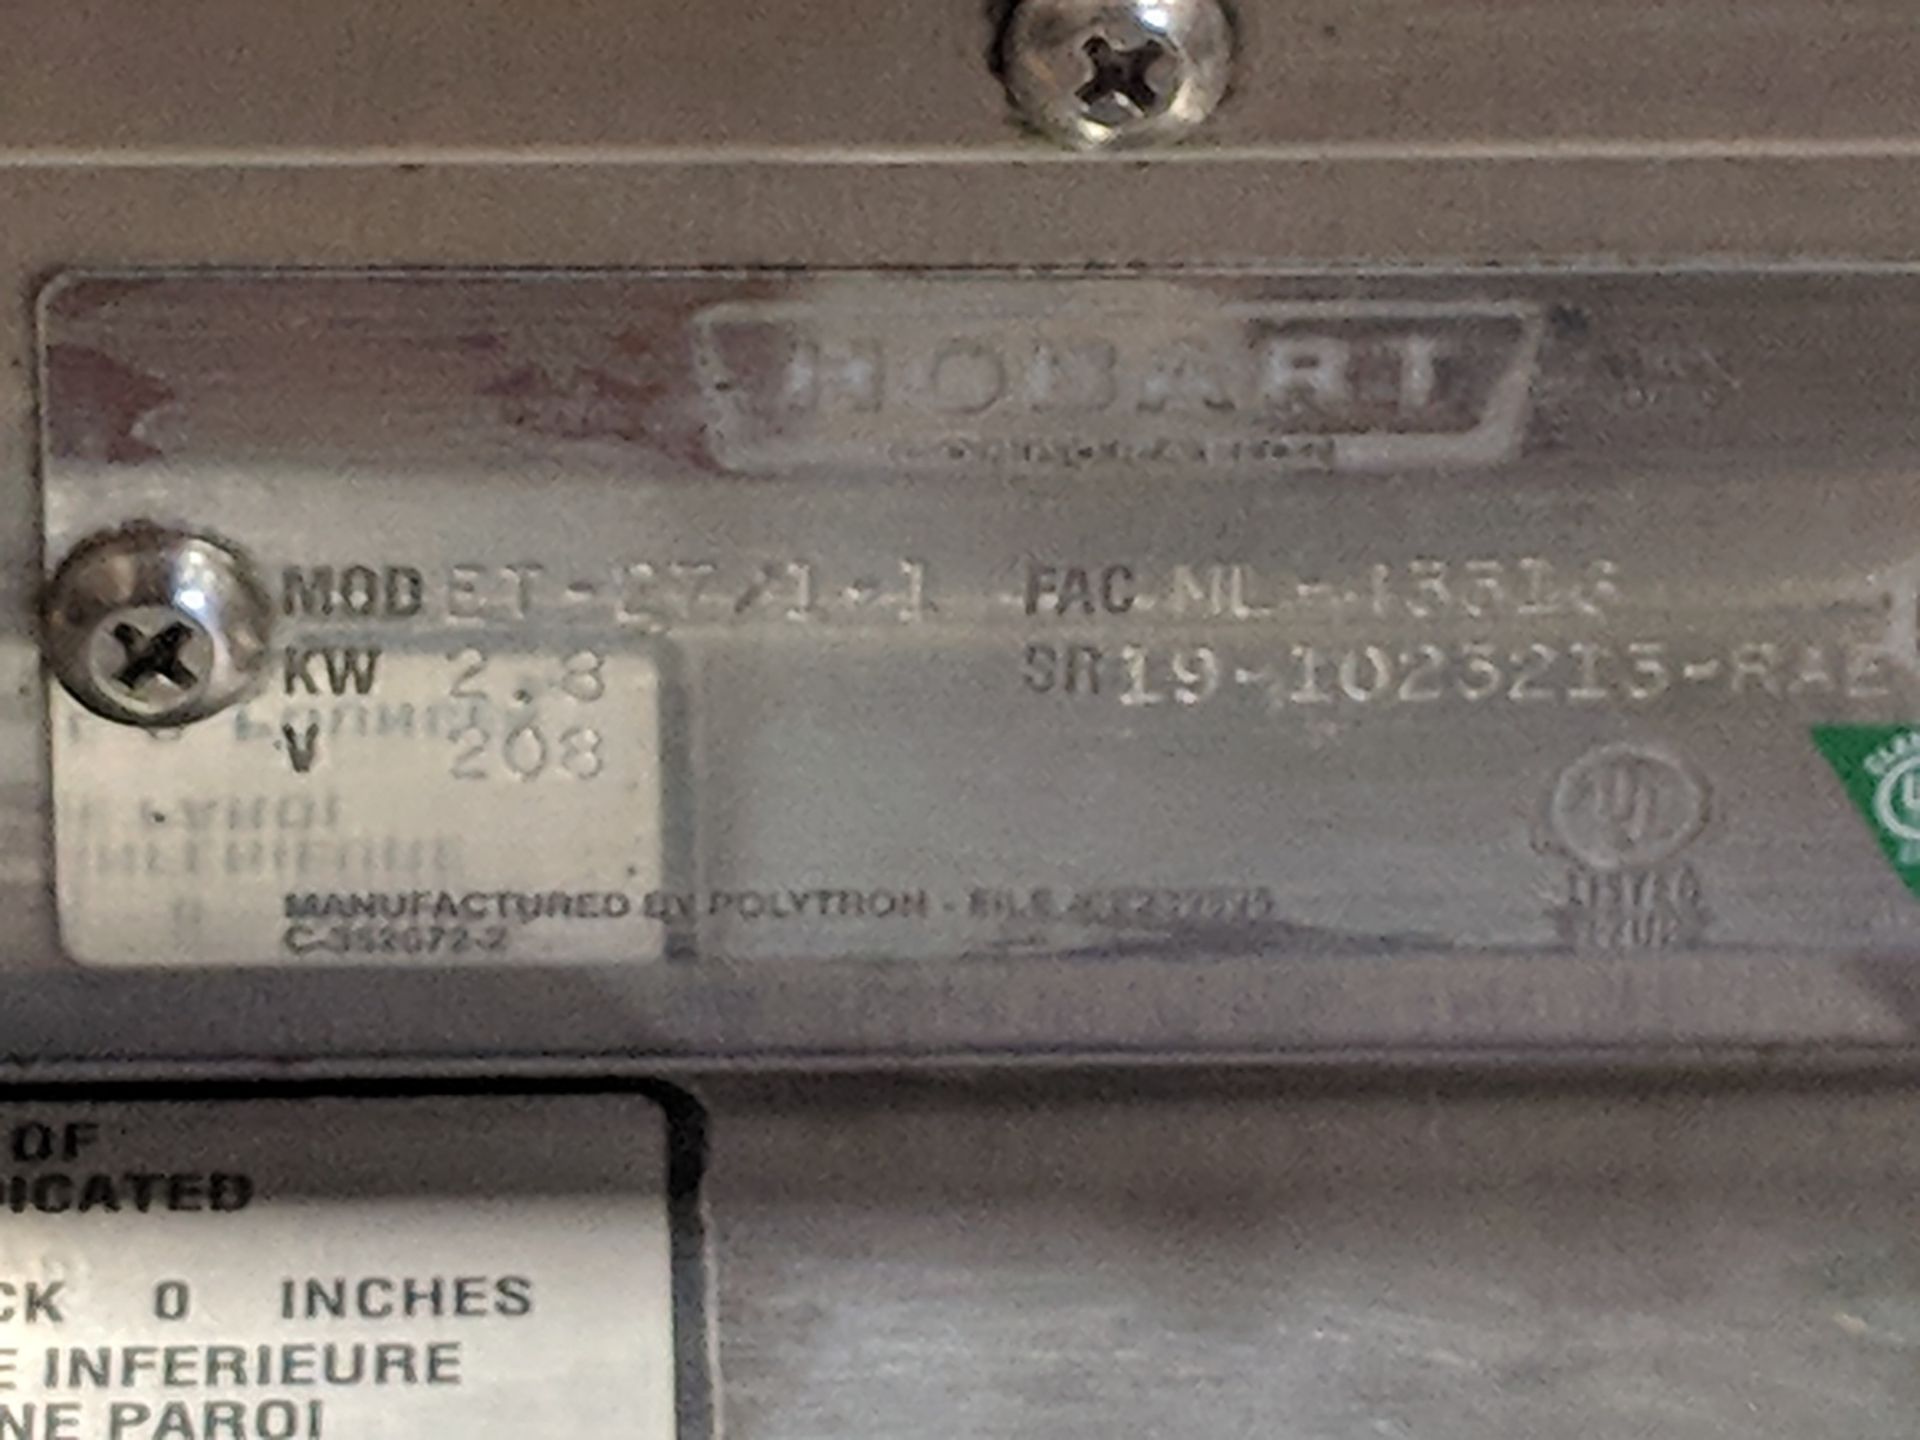 Hobart 4 Slicer Toaster, 208v, model ET-27, serial #19-1023213-RAE - Image 3 of 6